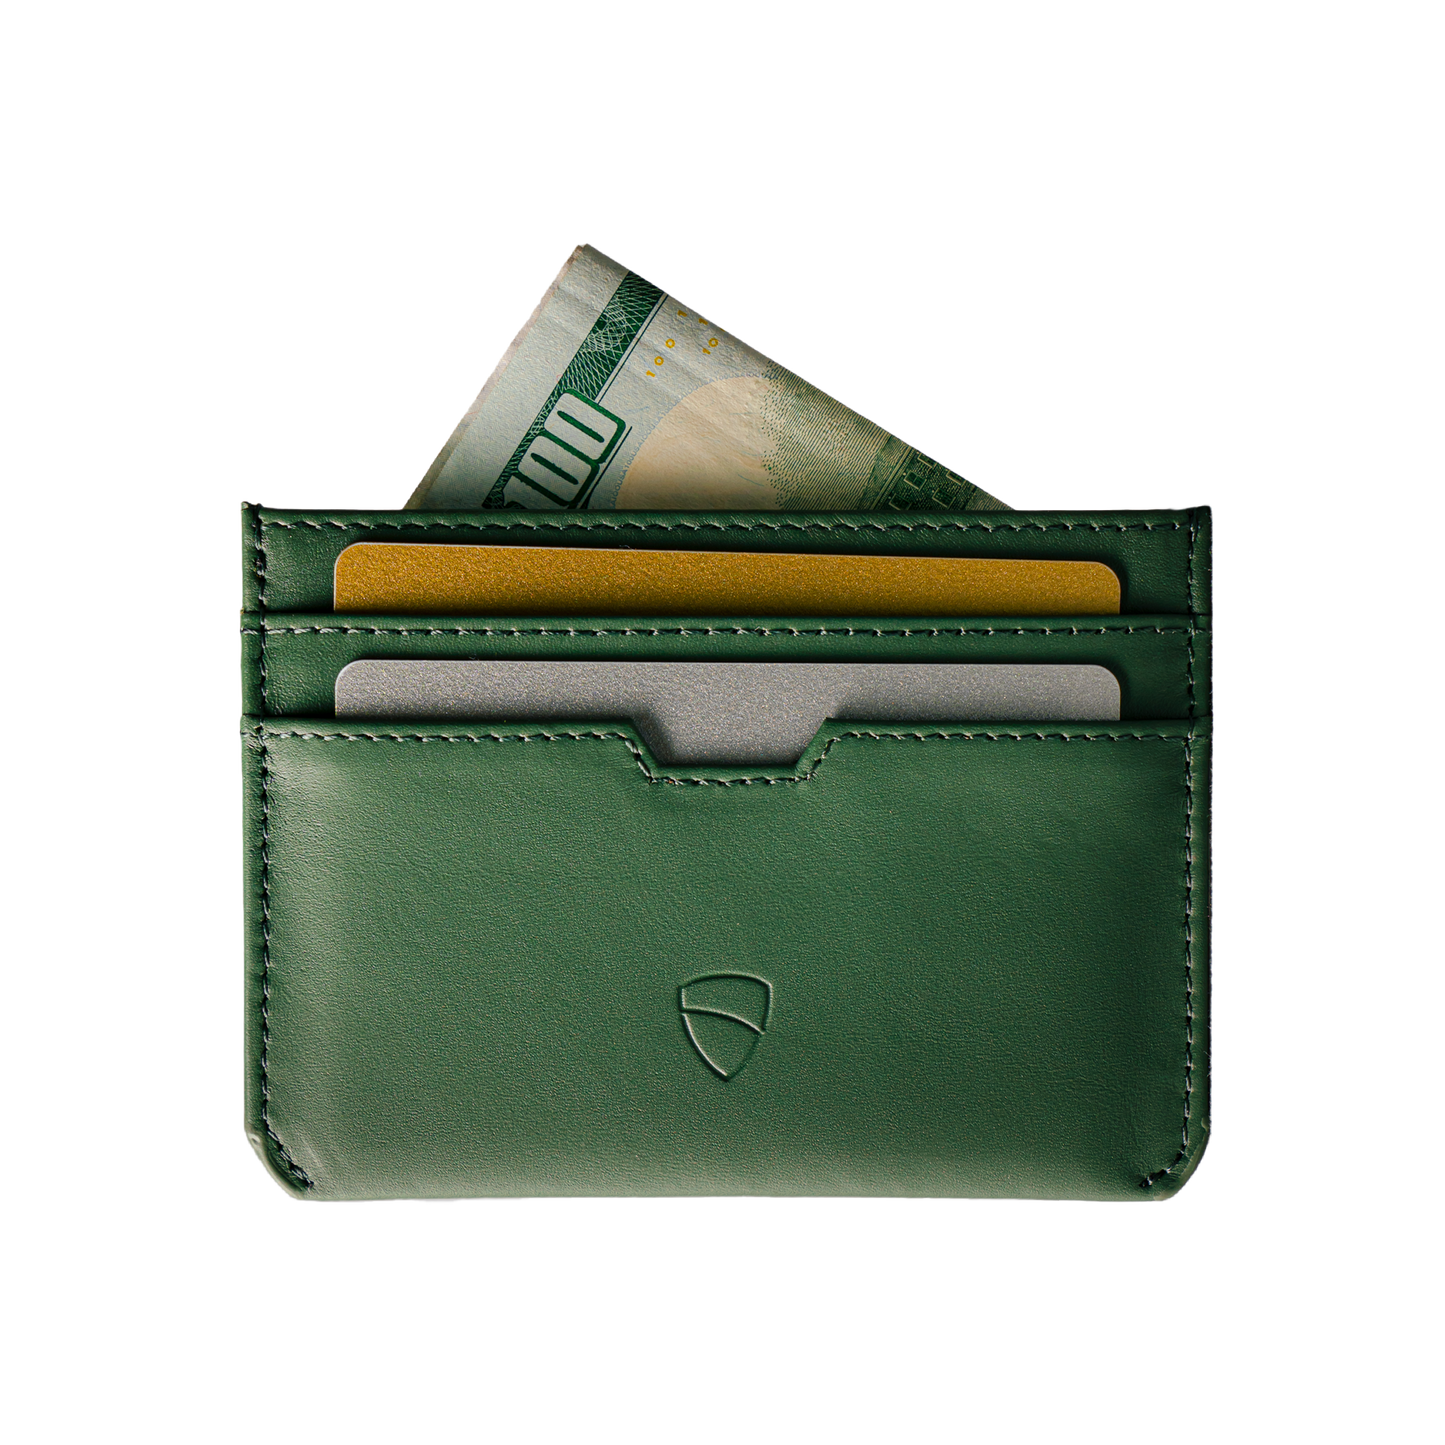 Luxury minimalist leather card wallet